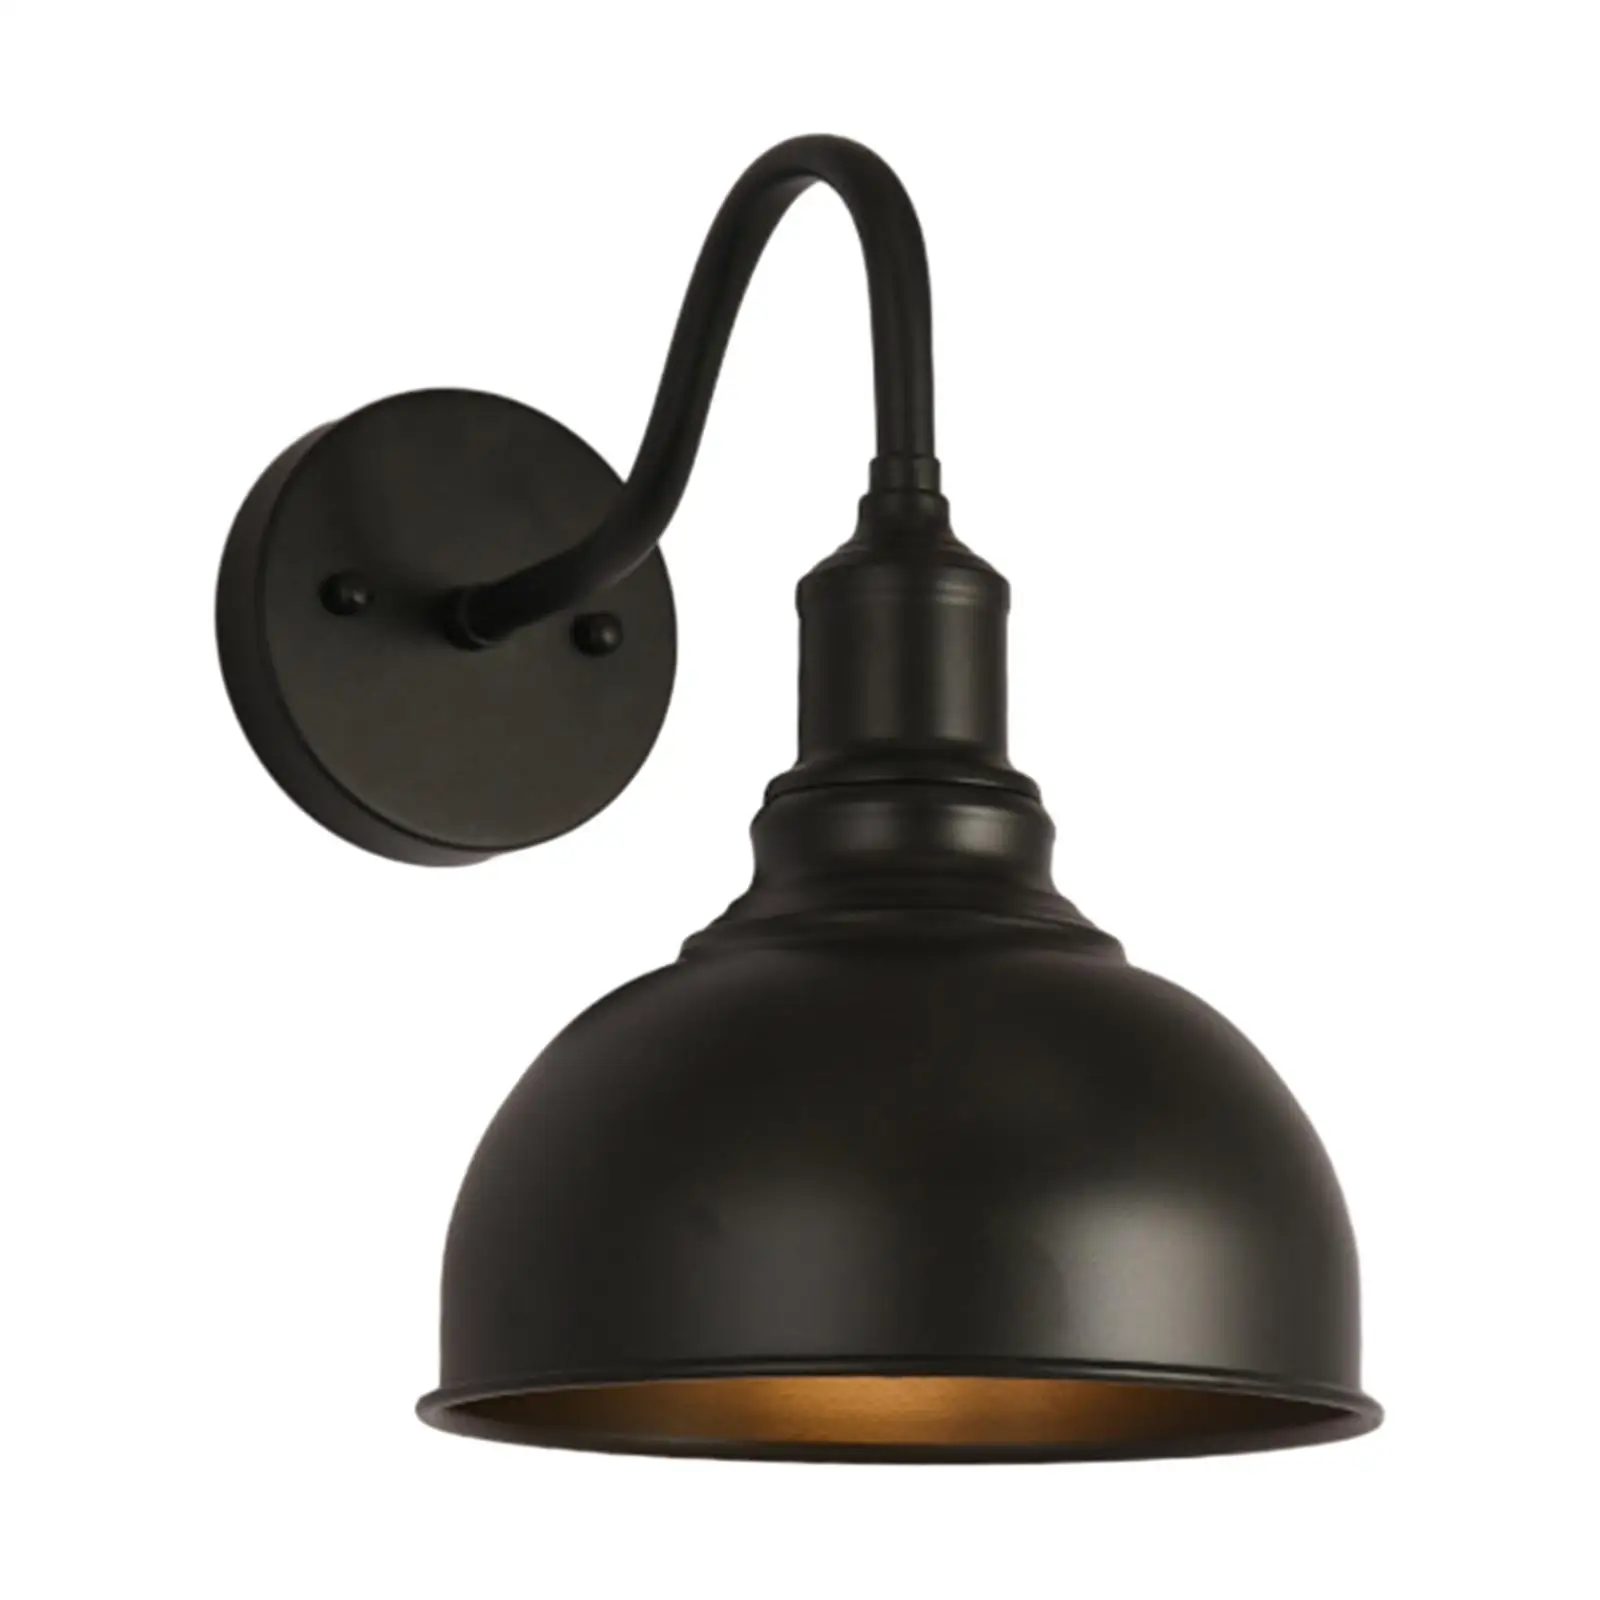 Industrial Wall Sconce Lamp E27 Bedside Lamp for Bedroom Restaurant Bathroom